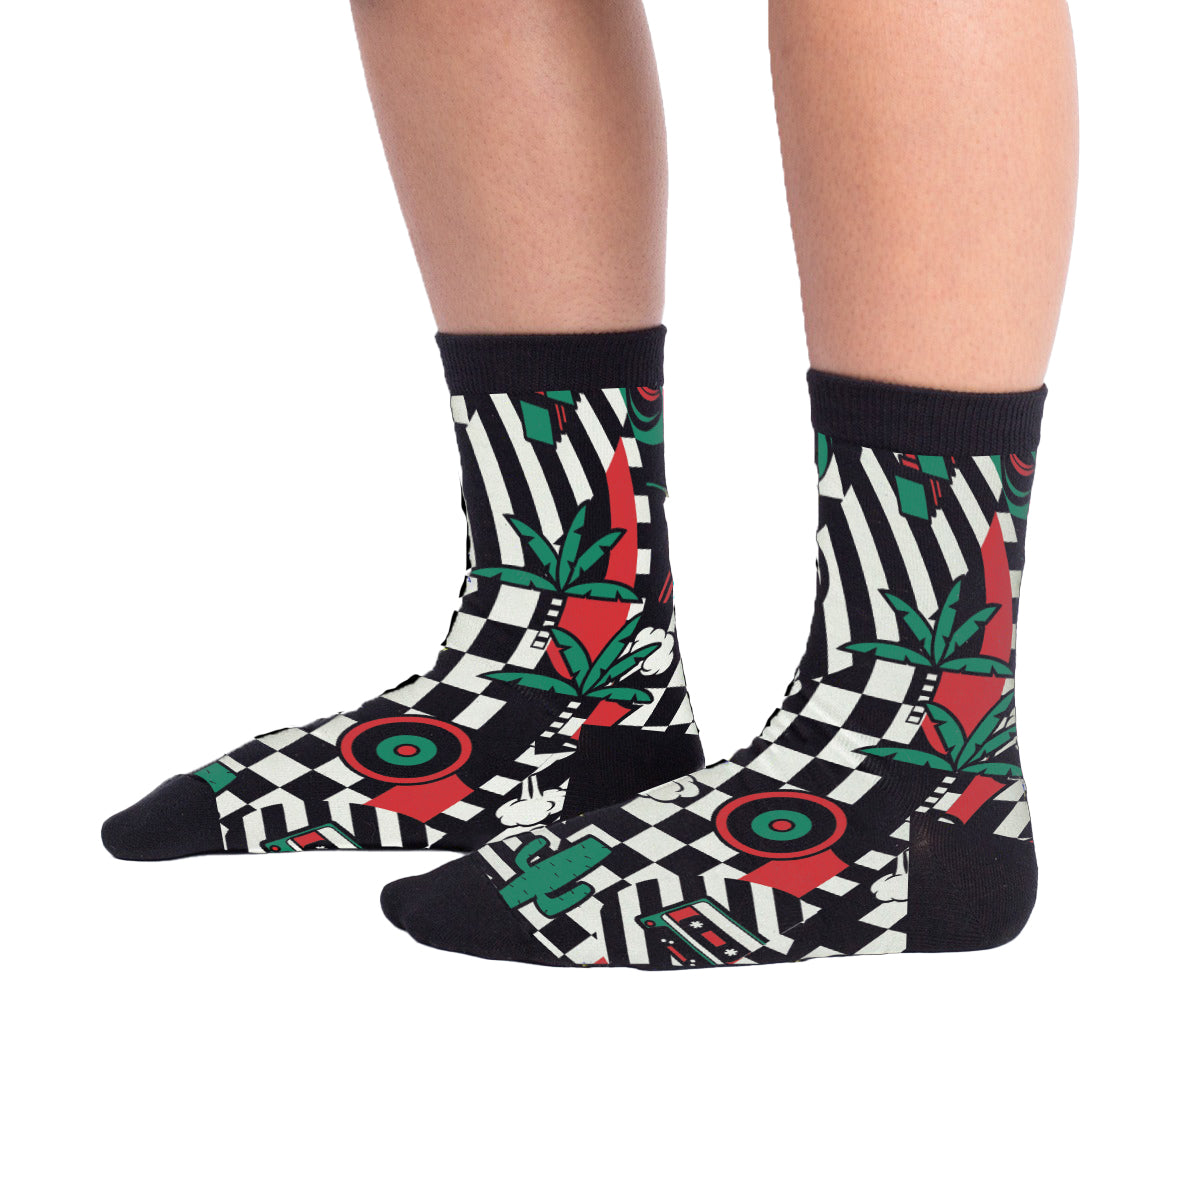 Kaf Unisex Socks - Multicolor -One Size